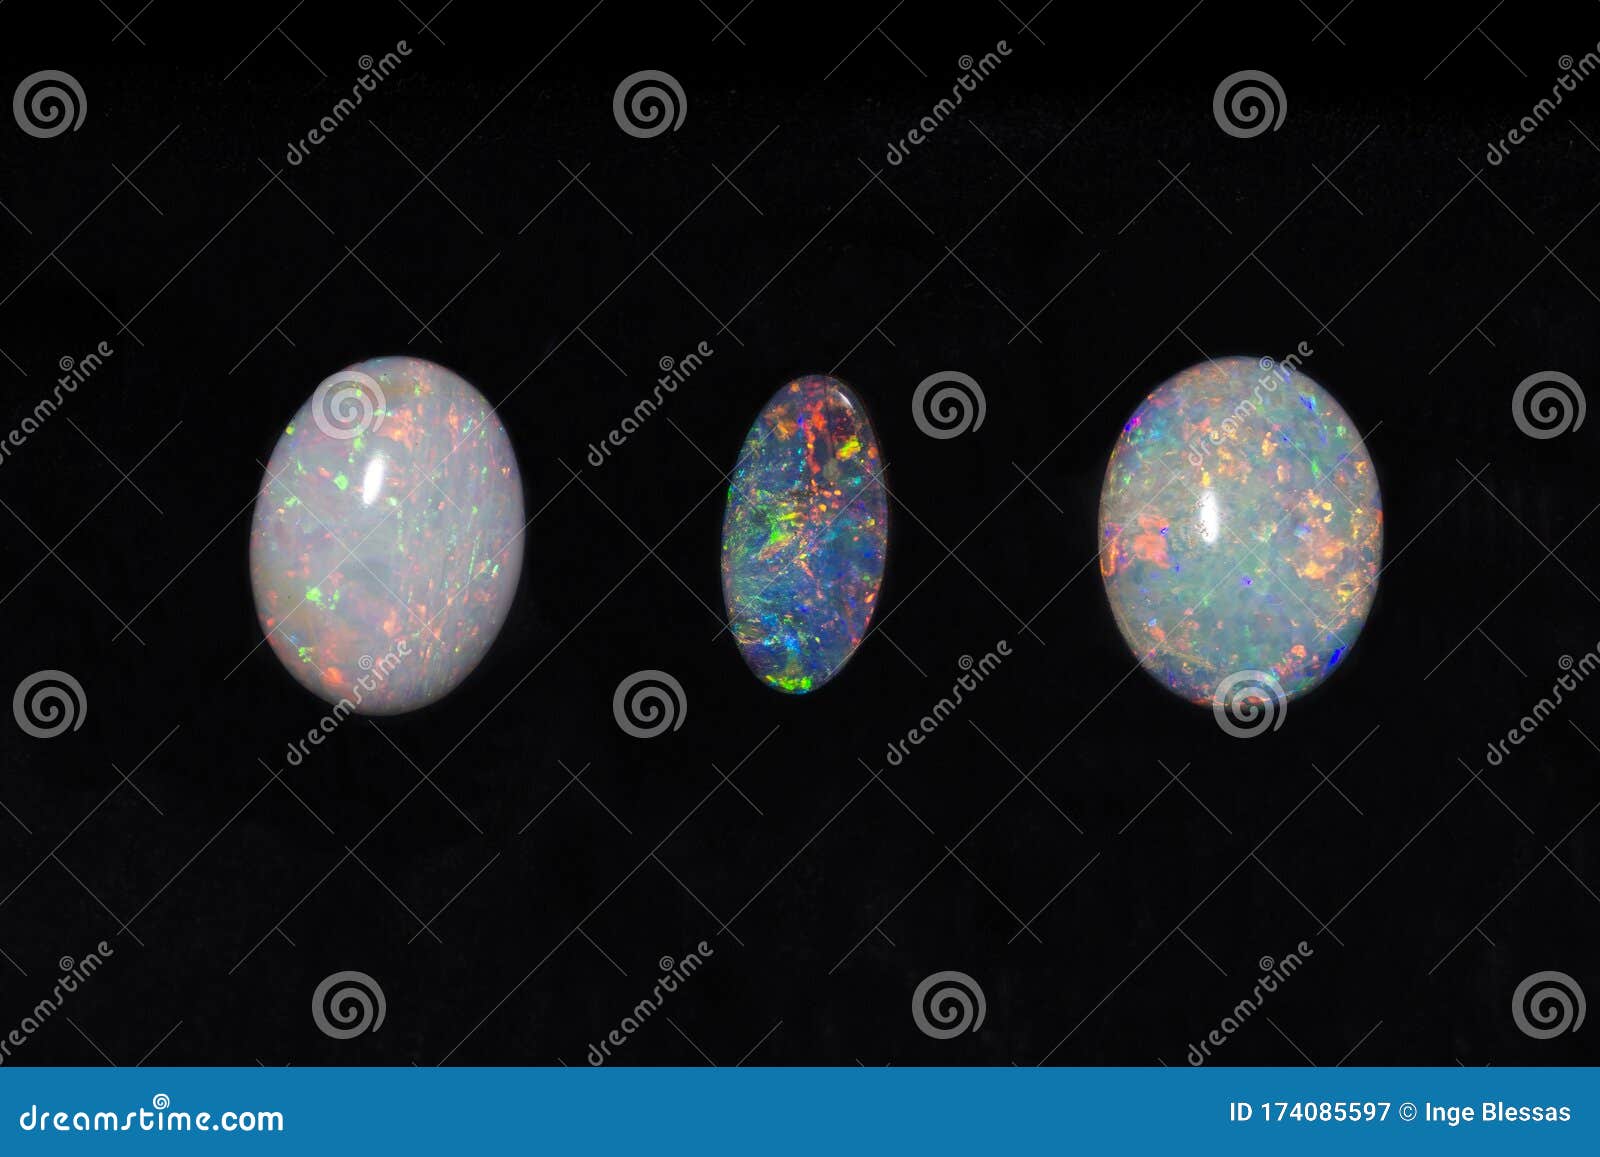 three precious queensland opals for quality jewelry